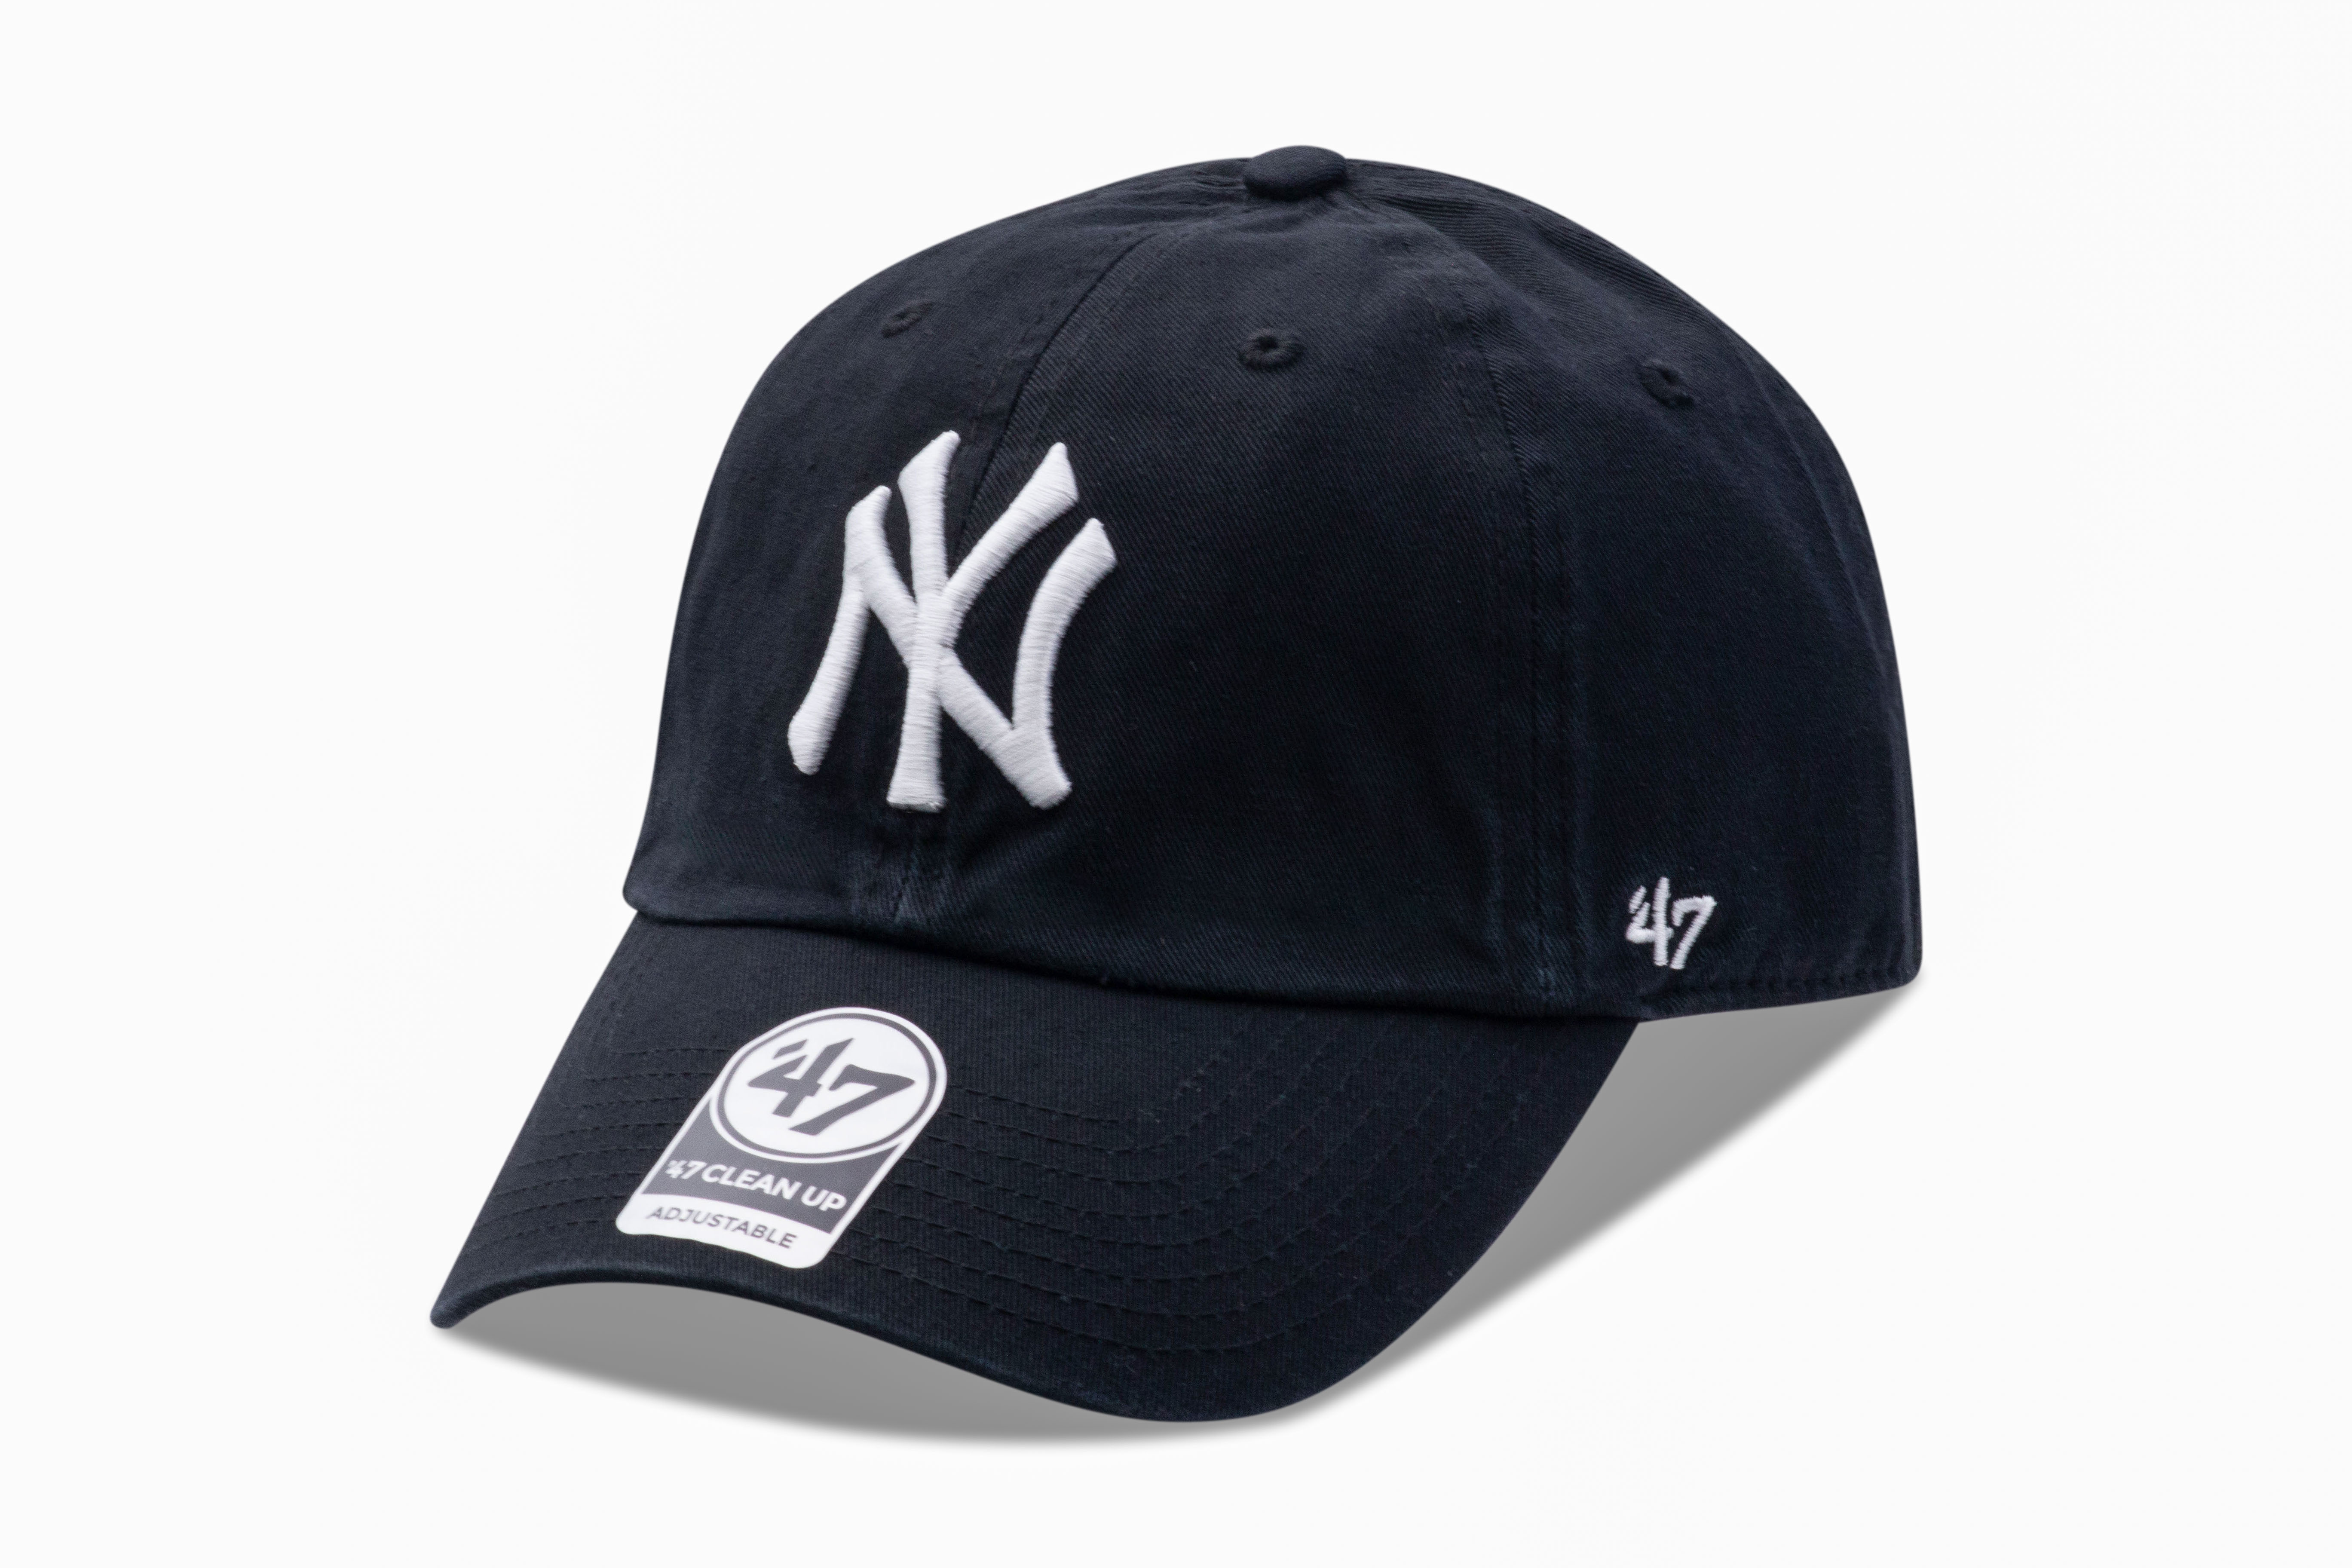 47 MLB New York Yankees Clean Up Cap - Black - One Size